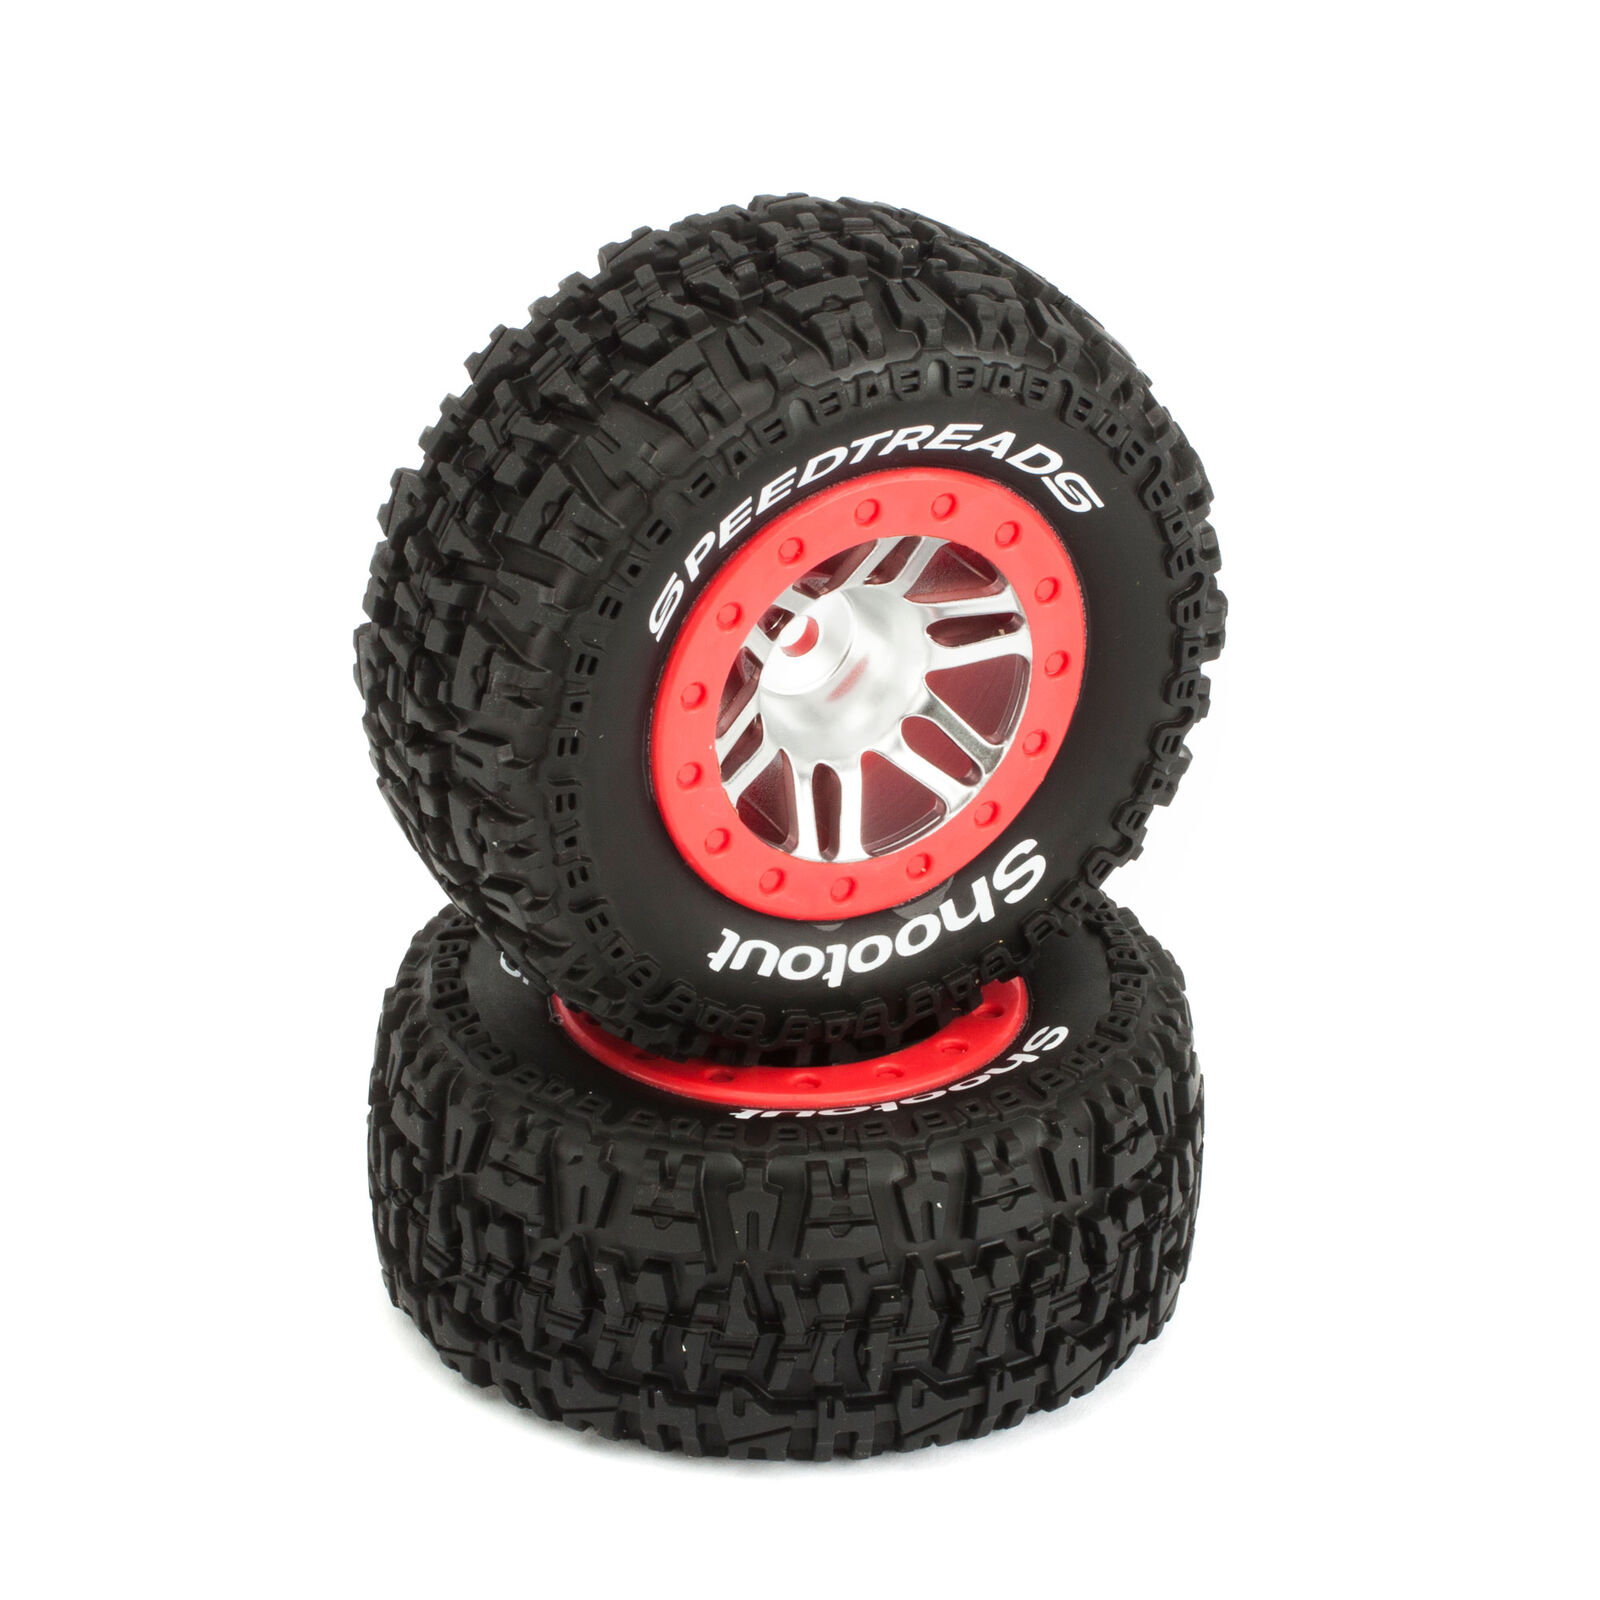 SpeedTreads™ Shootout™ SC Tires Mounted: Slash Front (2)